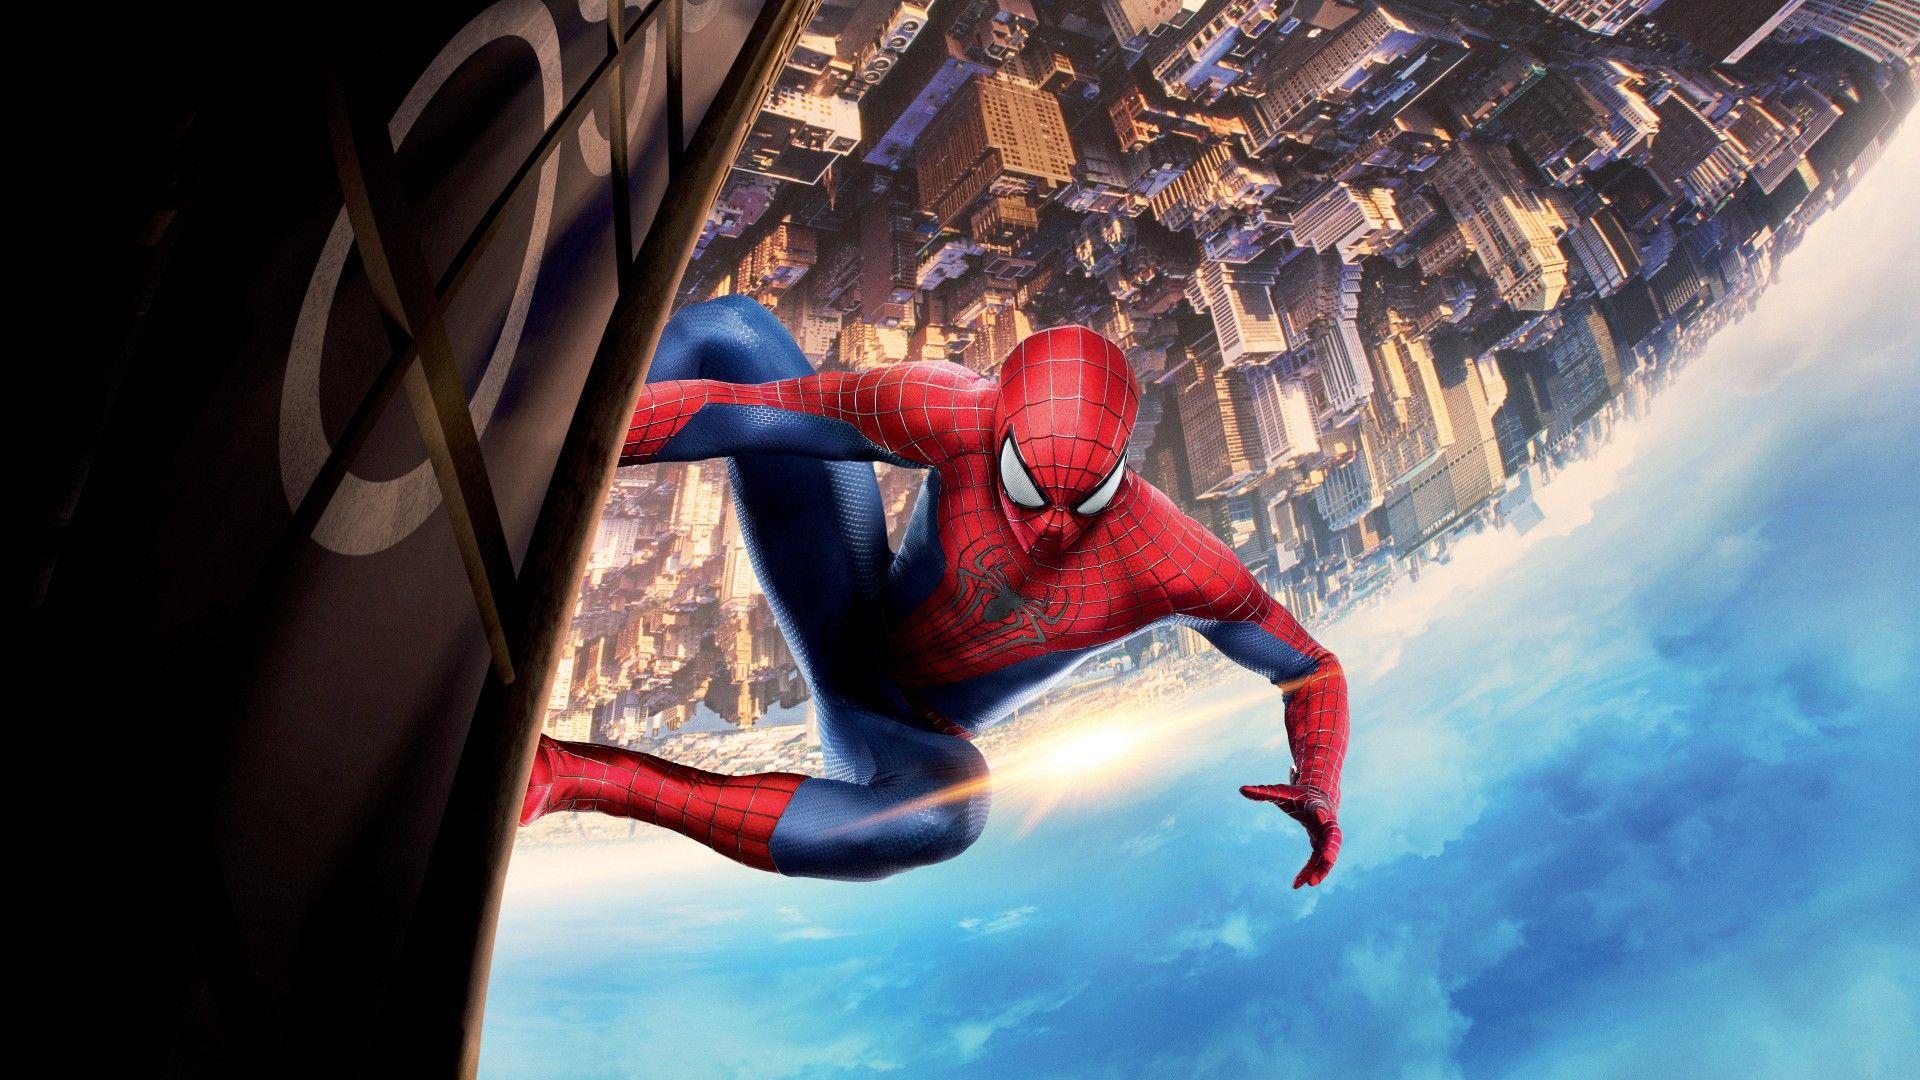 Download Wallpaper Of Spider Man, 4K, 8K, Movies